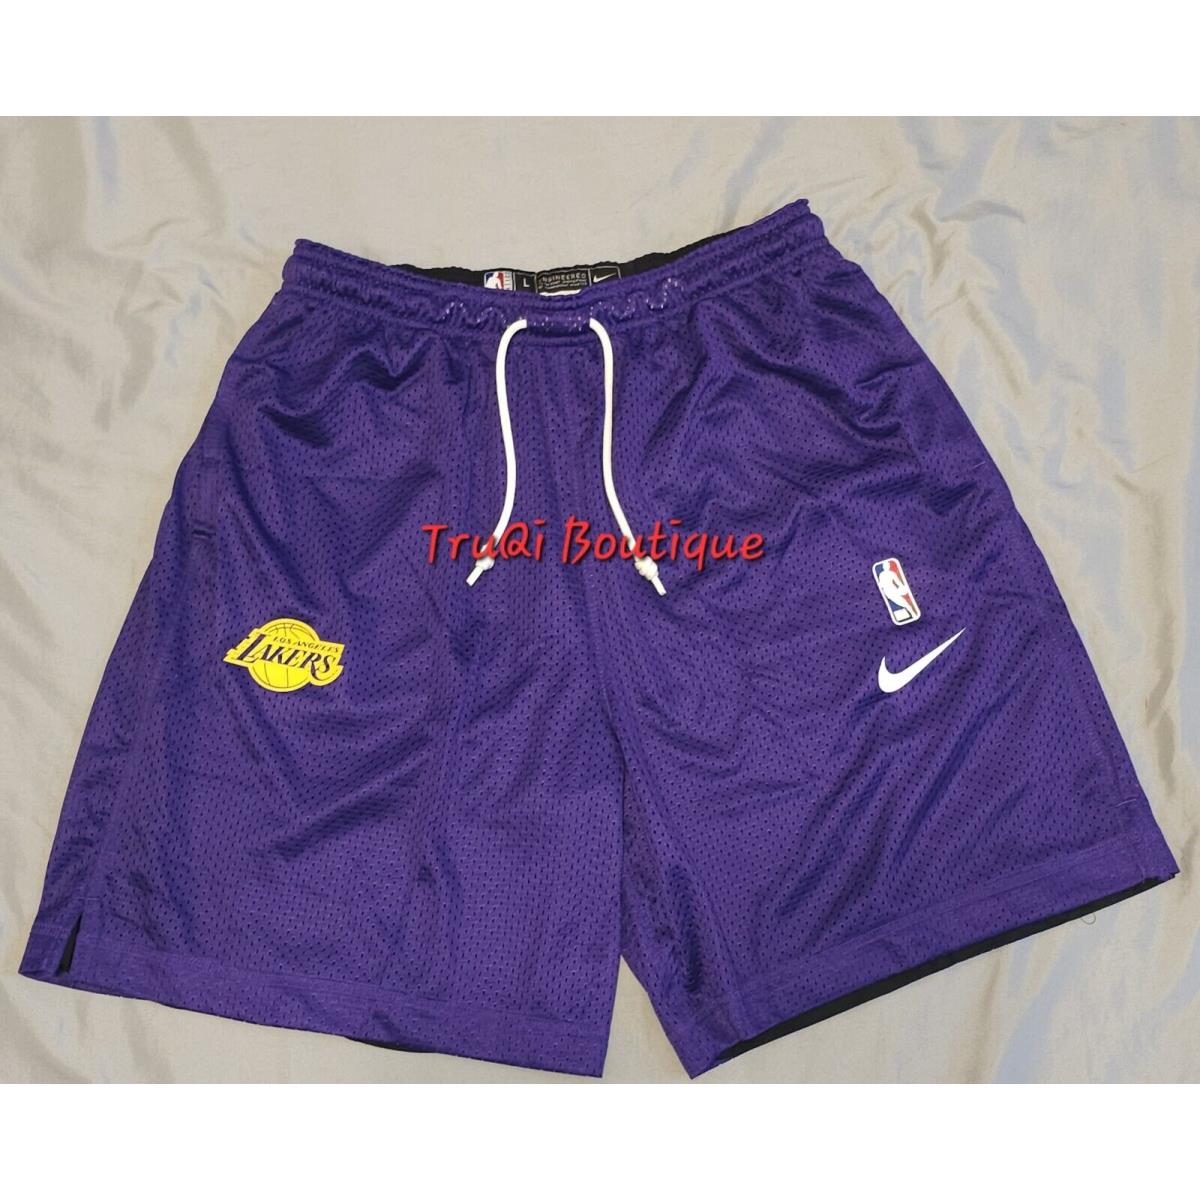 Nike Nba Standard Issue Team Reversible Mesh Basketball Shorts LA Lakers LT